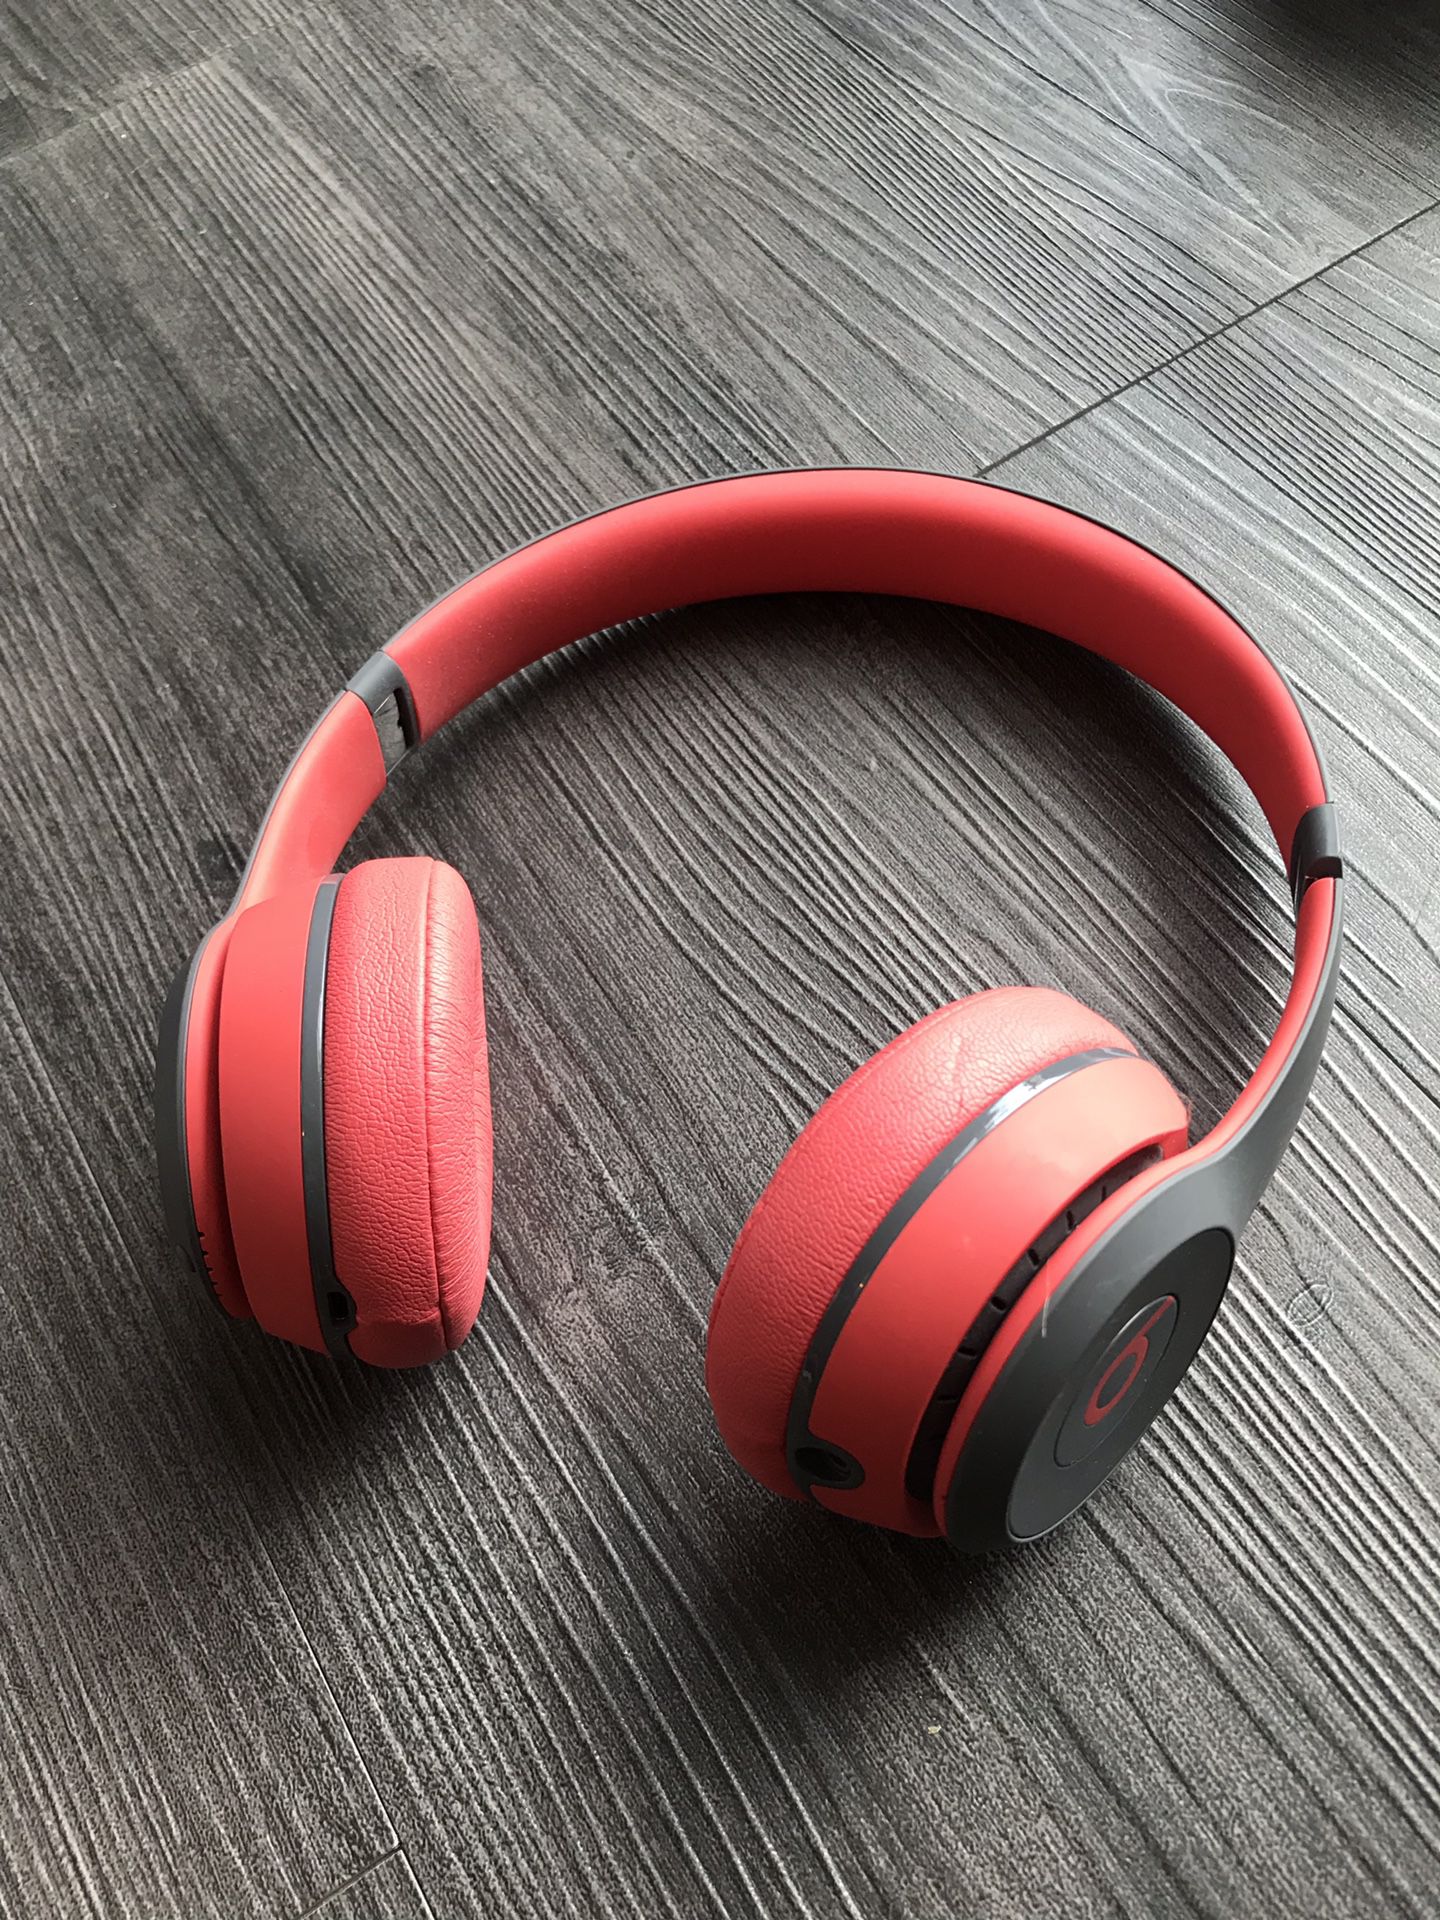 Beats Solo 3 Wireless headphones